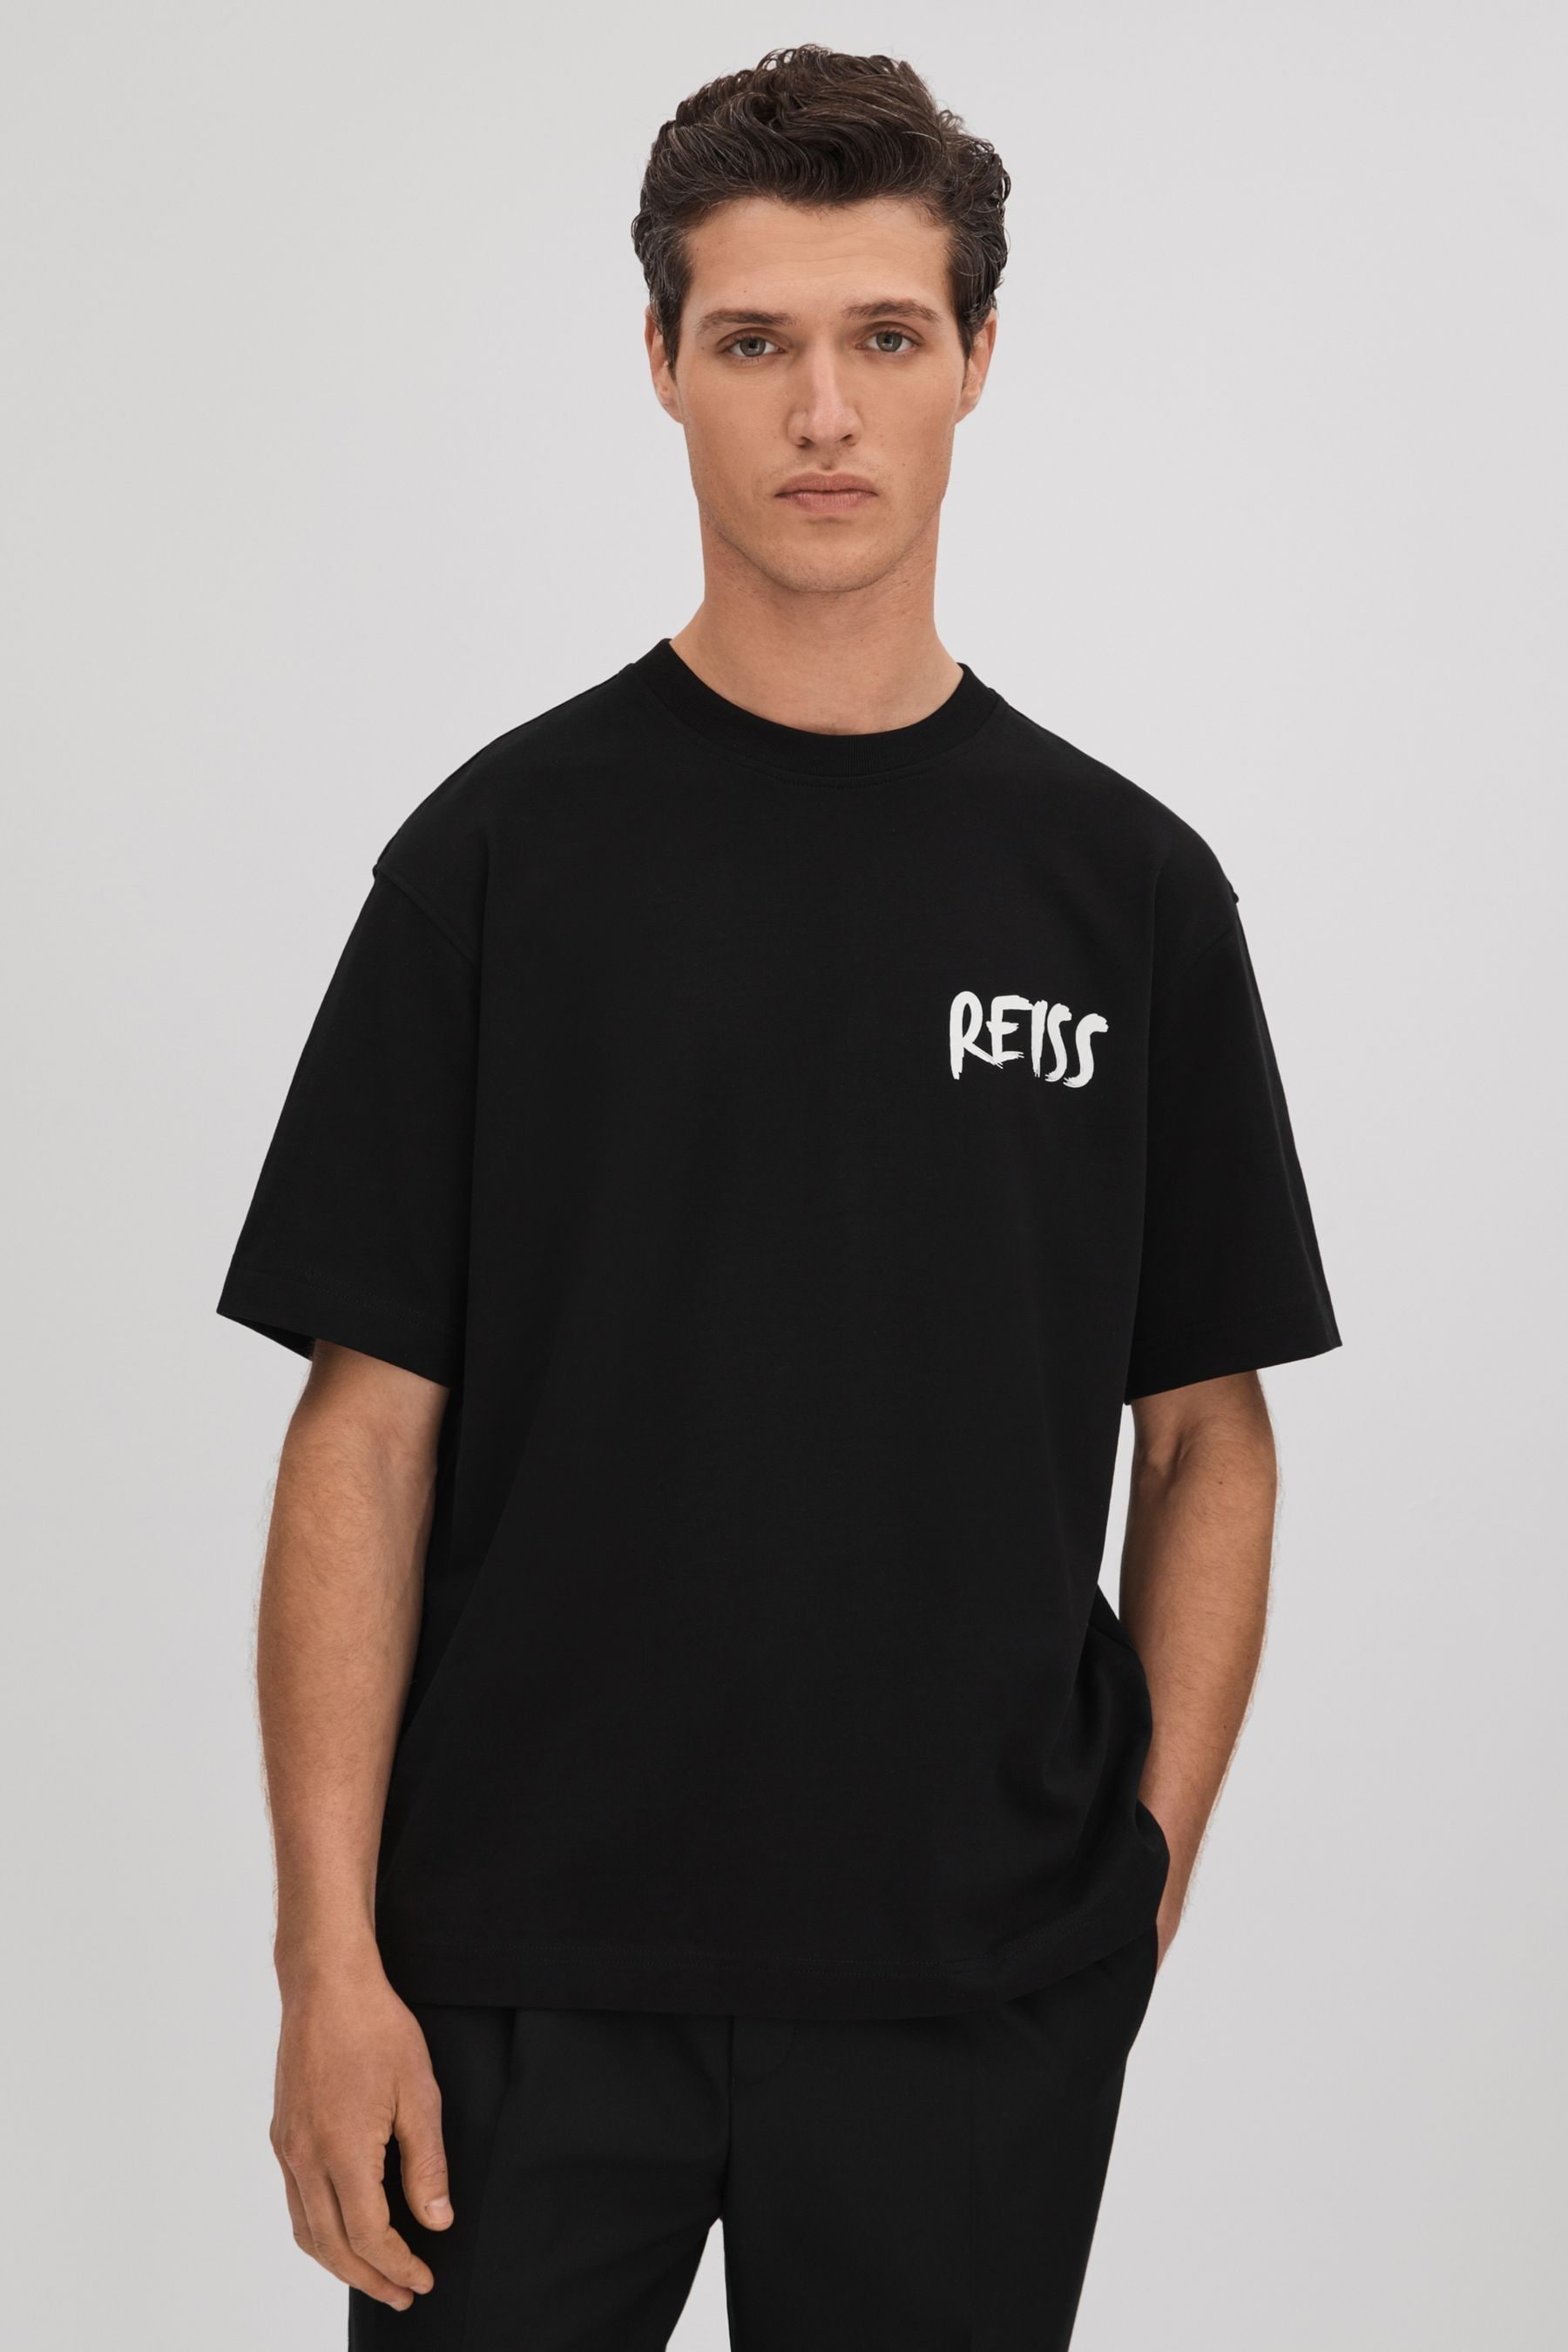 Reiss Abbott - Black/white Cotton Motif T-shirt, L